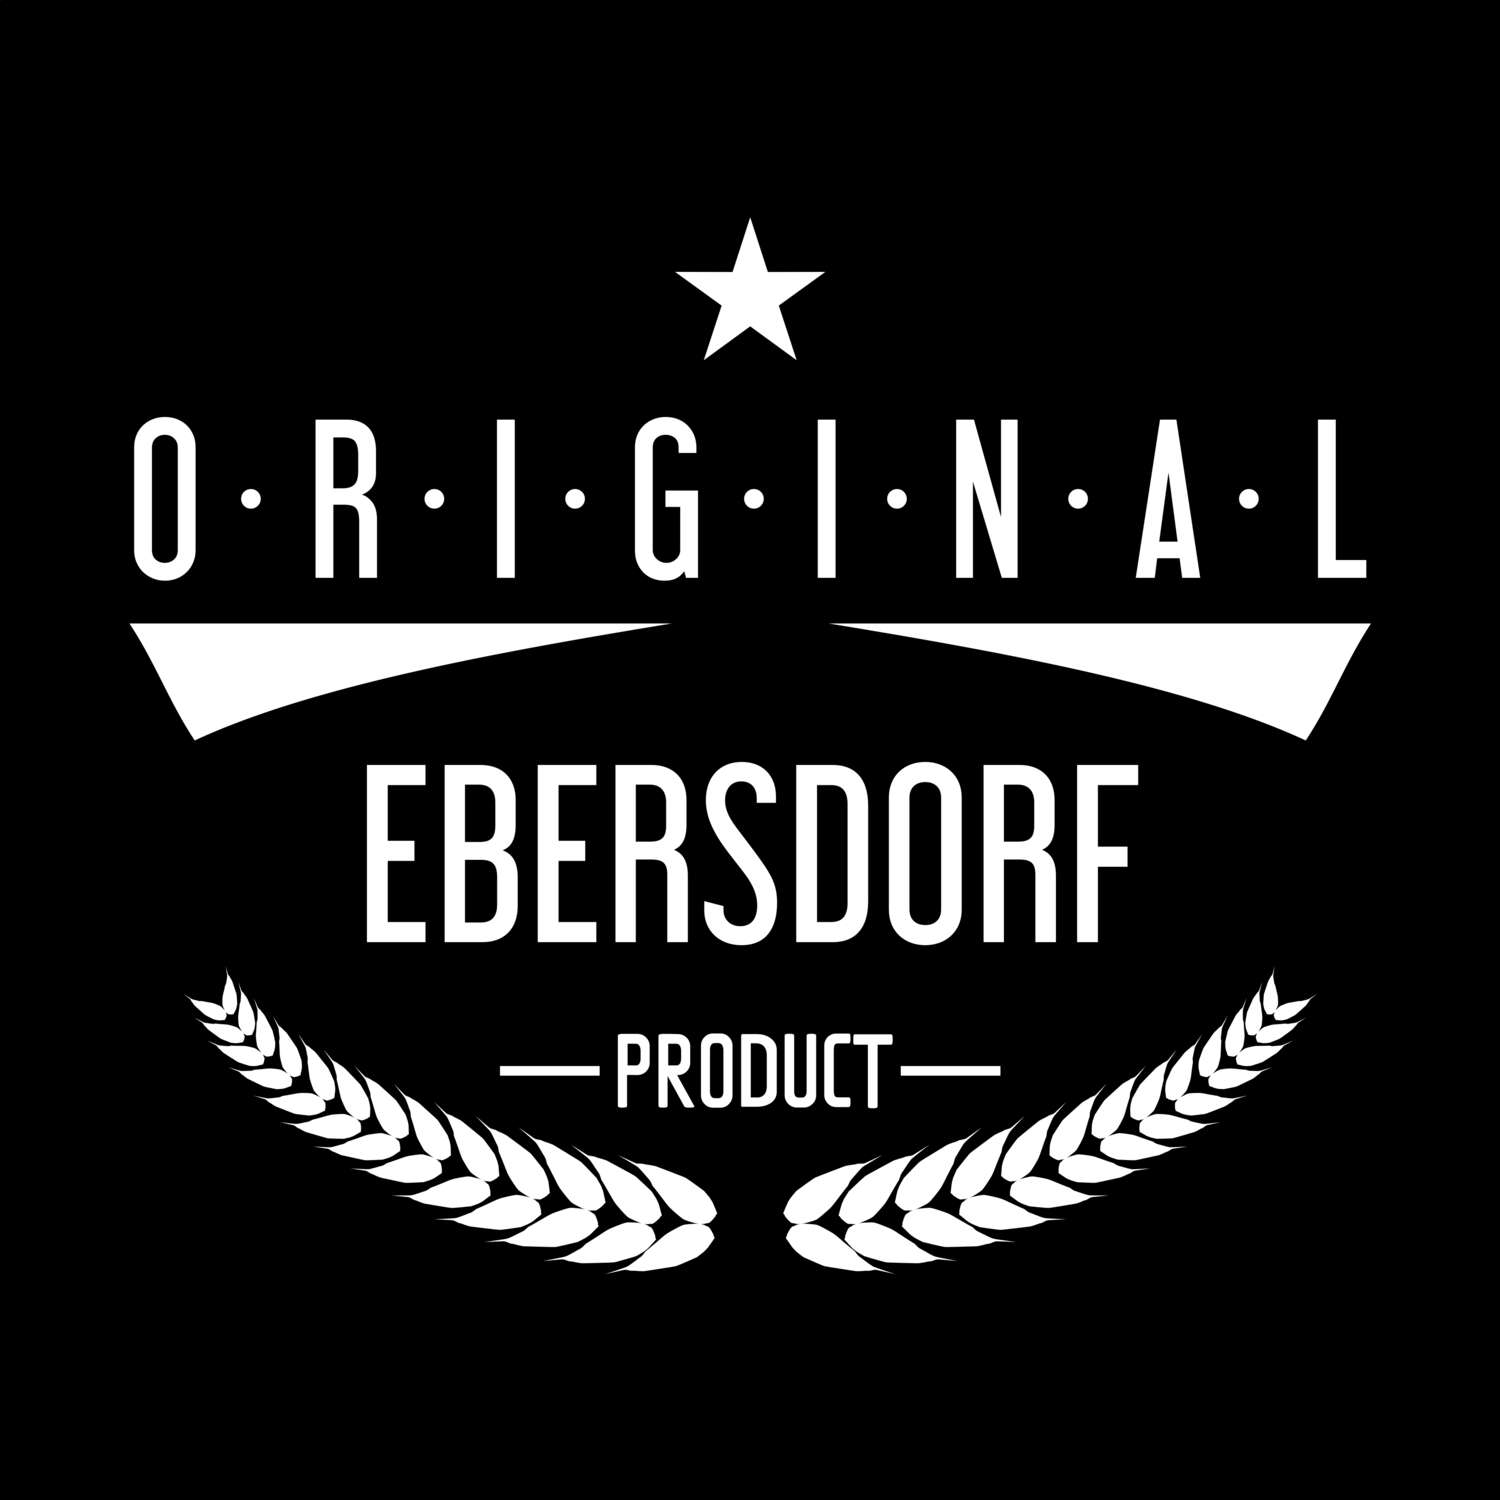 Ebersdorf T-Shirt »Original Product«